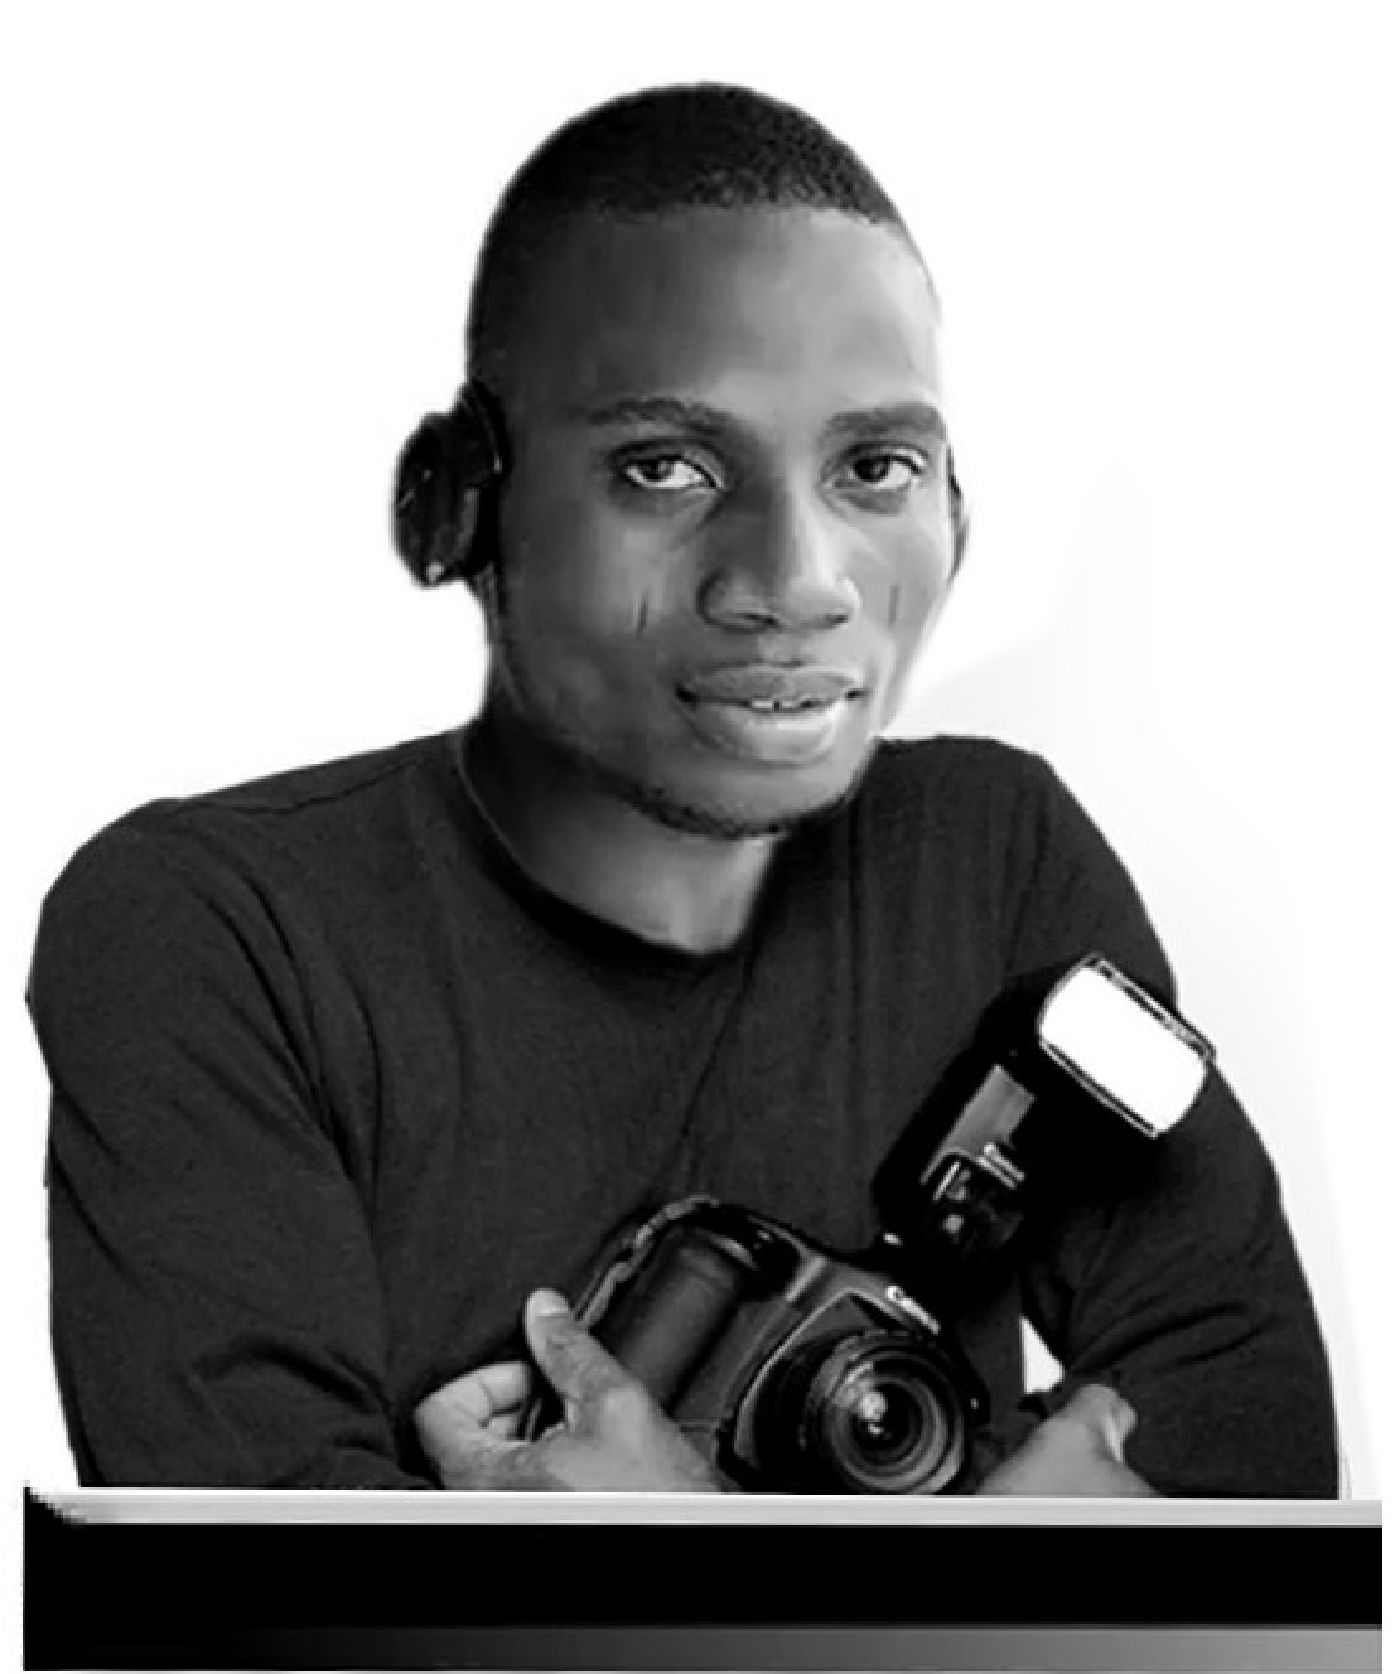 Salam Abiodun Photoshop expert